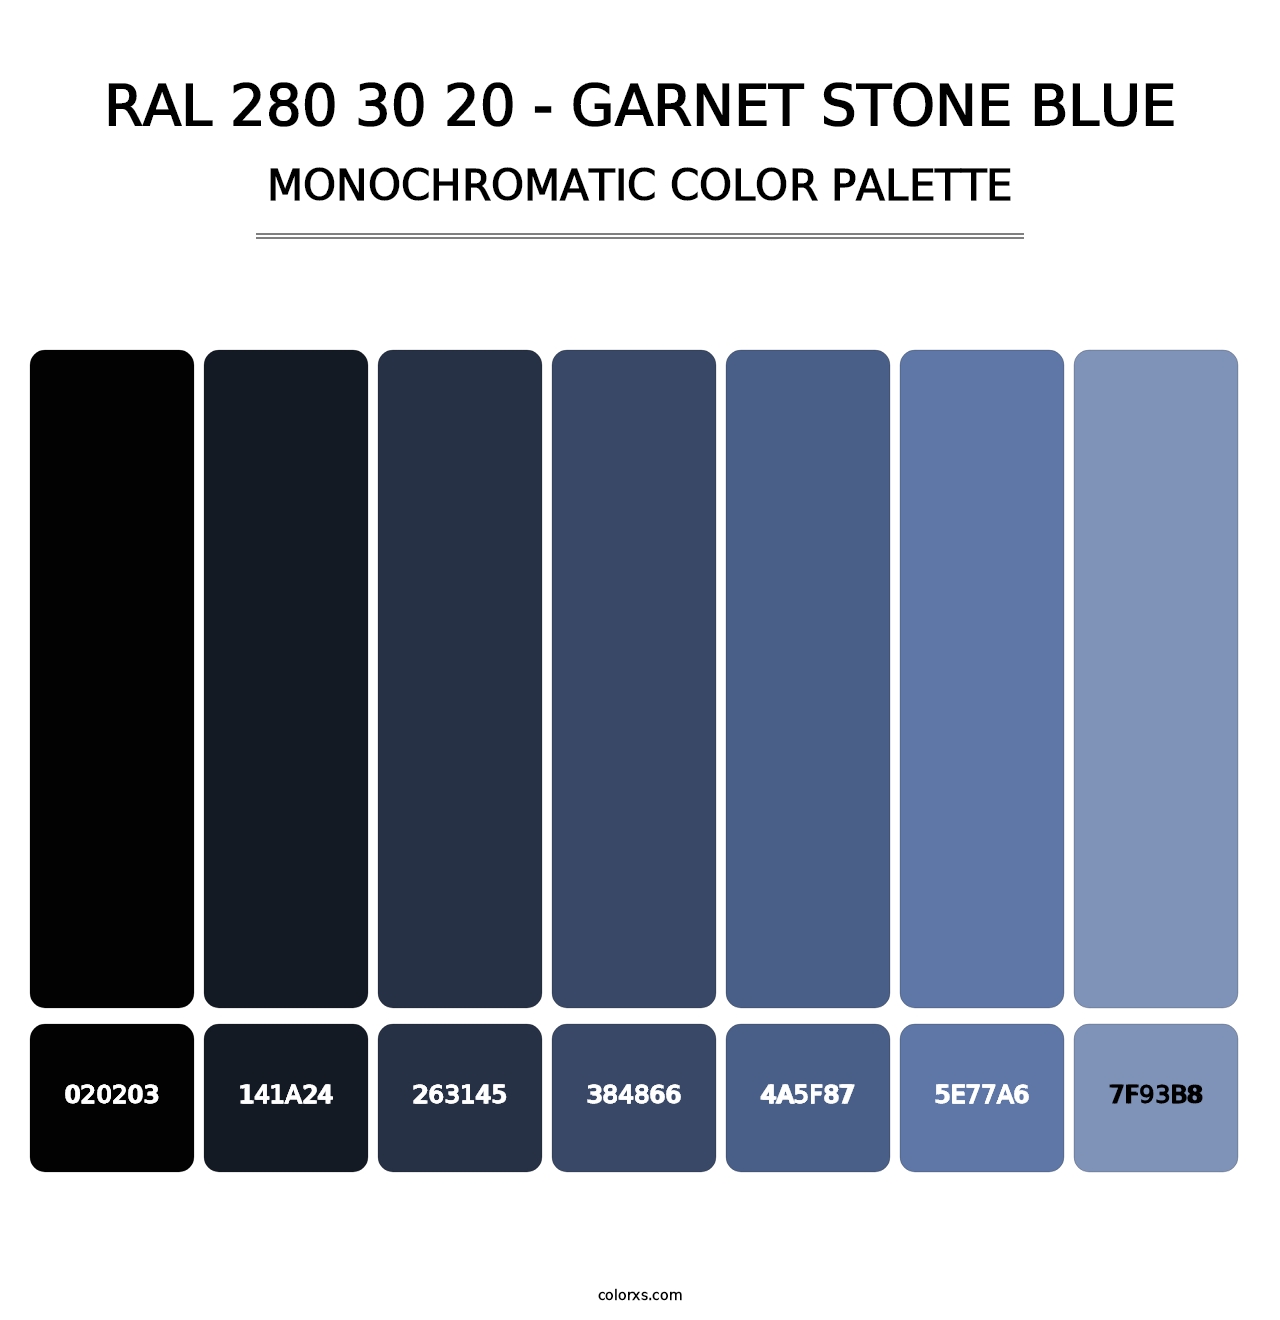 RAL 280 30 20 - Garnet Stone Blue - Monochromatic Color Palette